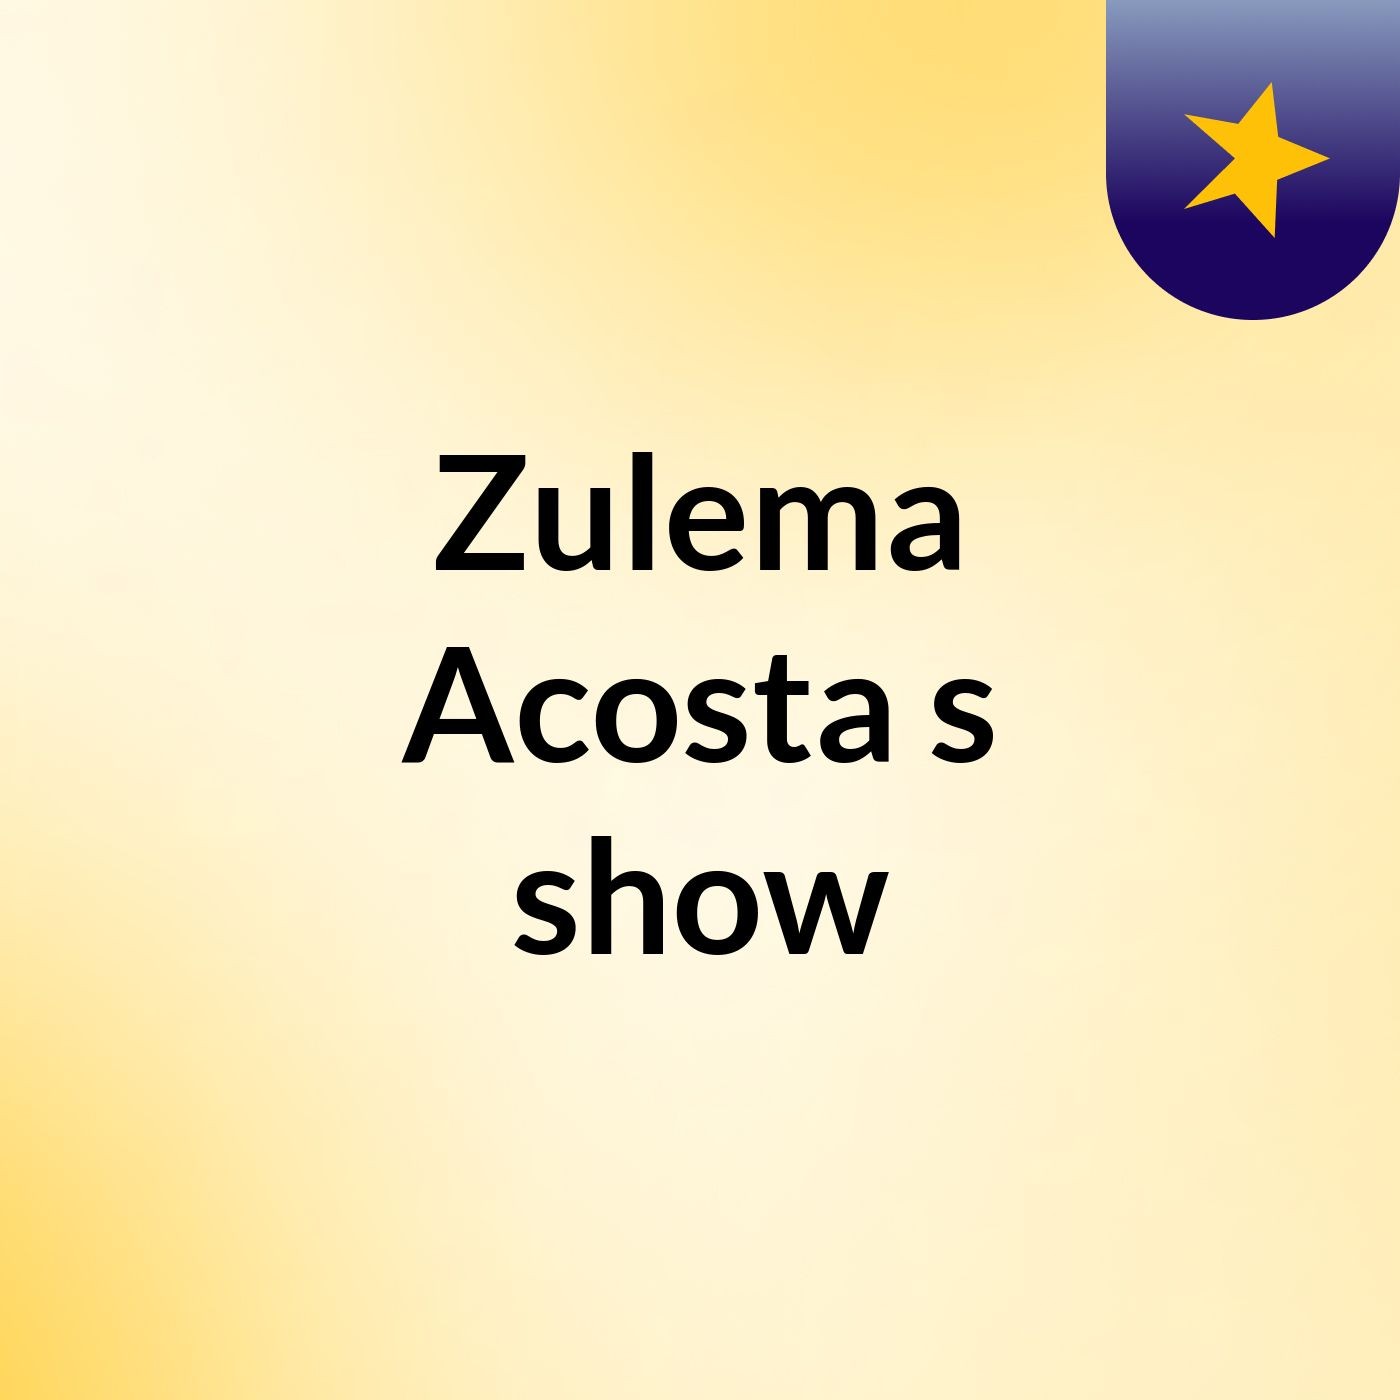 Zulema Acosta's show